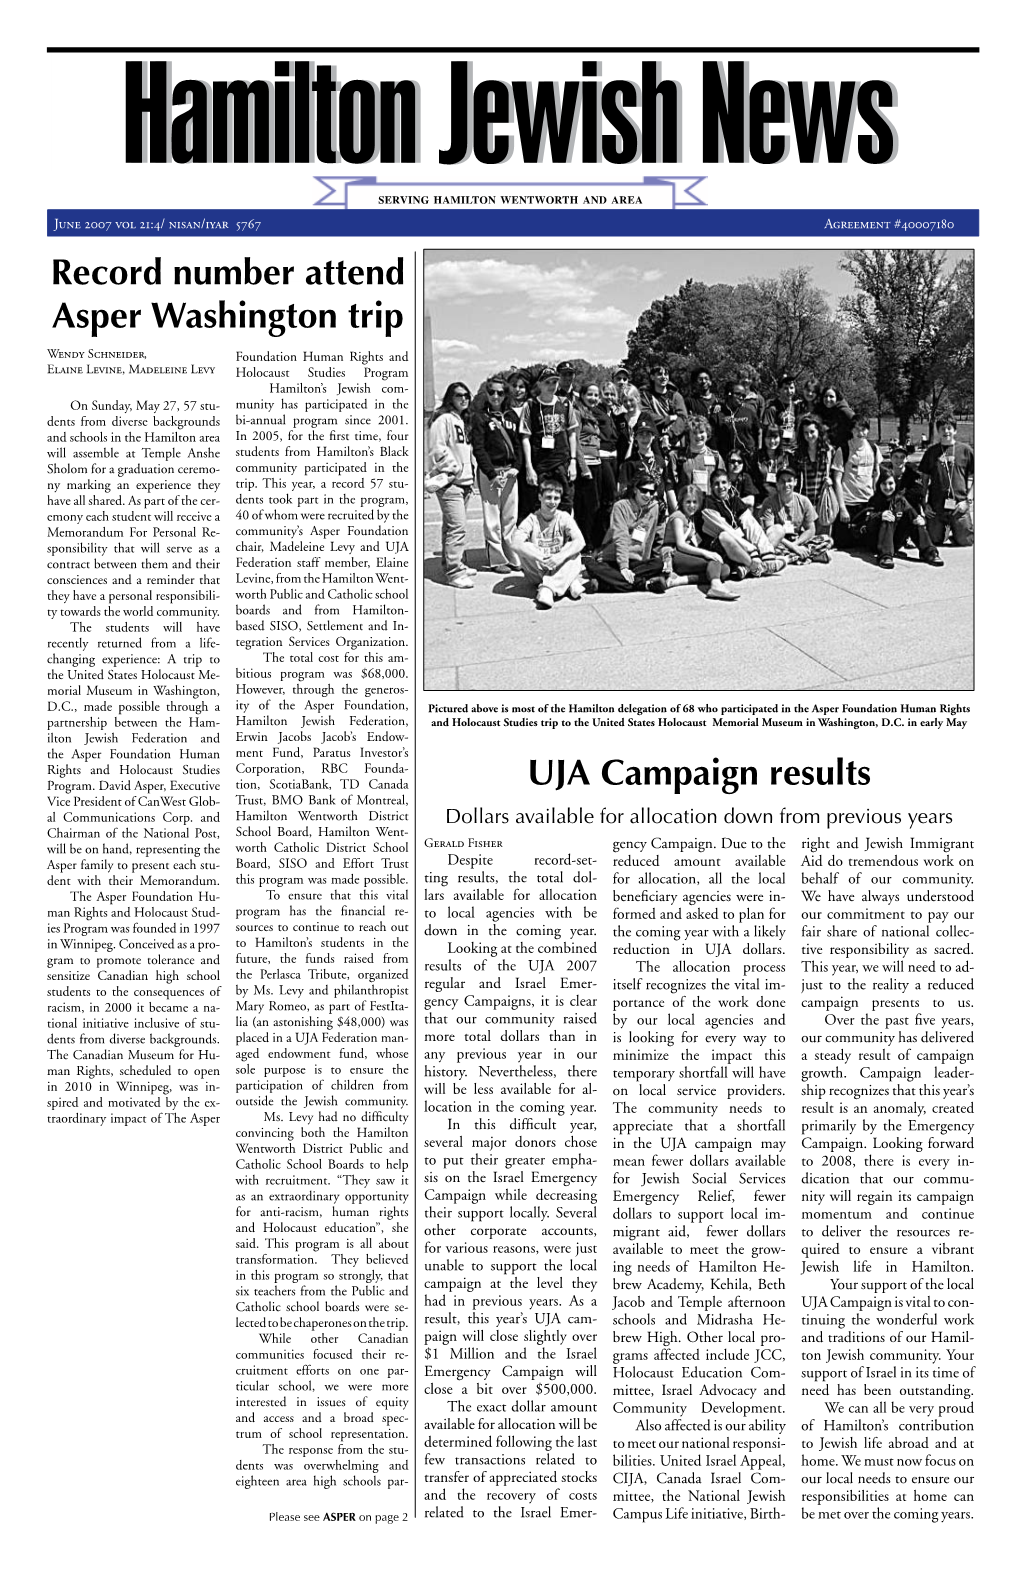 Record Number Attend Asper Washington Trip UJA Campaign Results